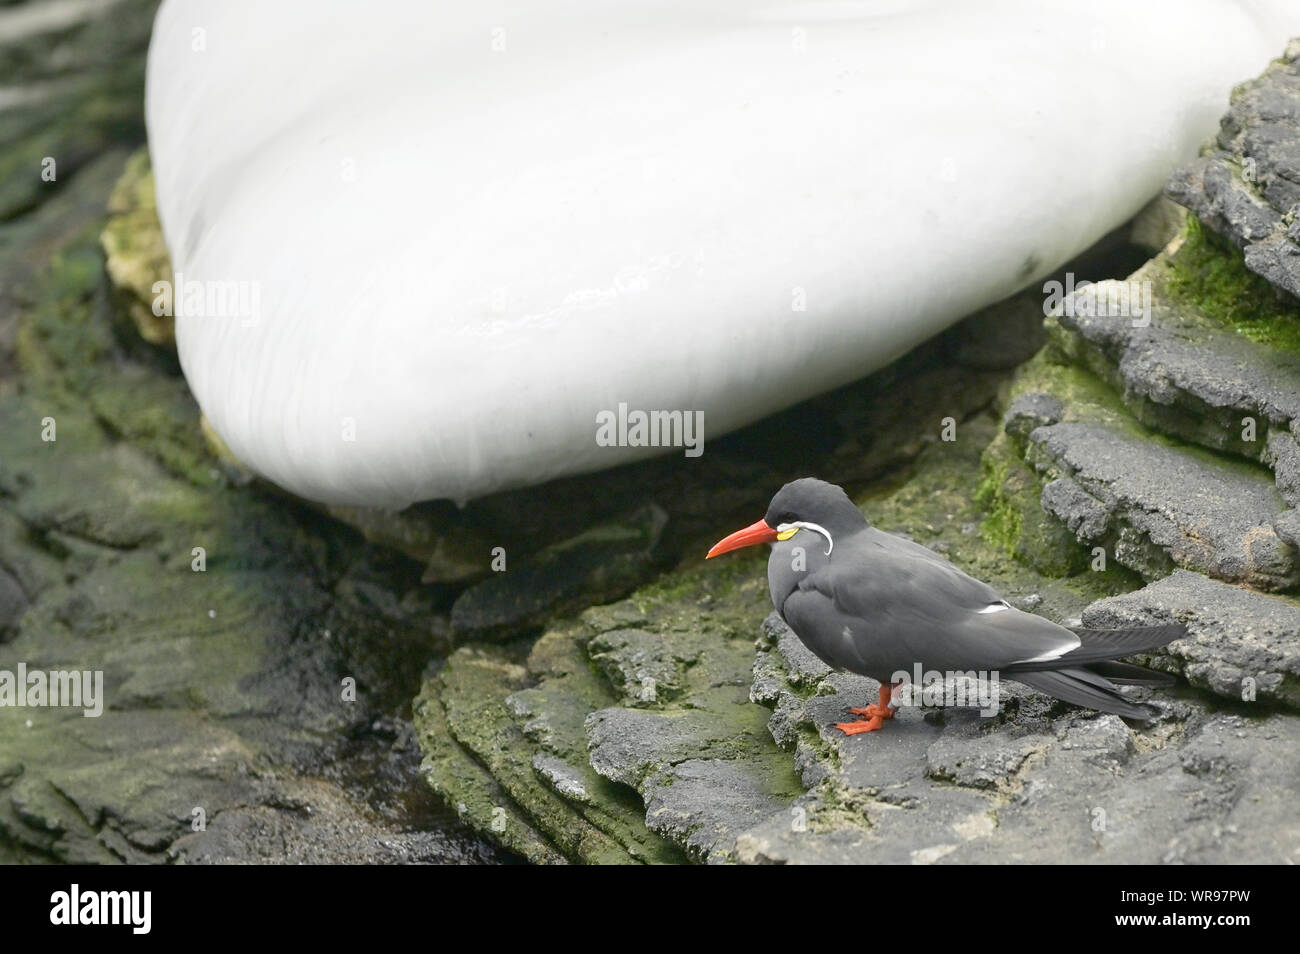 Inca tern (Larosterna inca) bird on ground and ice Stock Photo